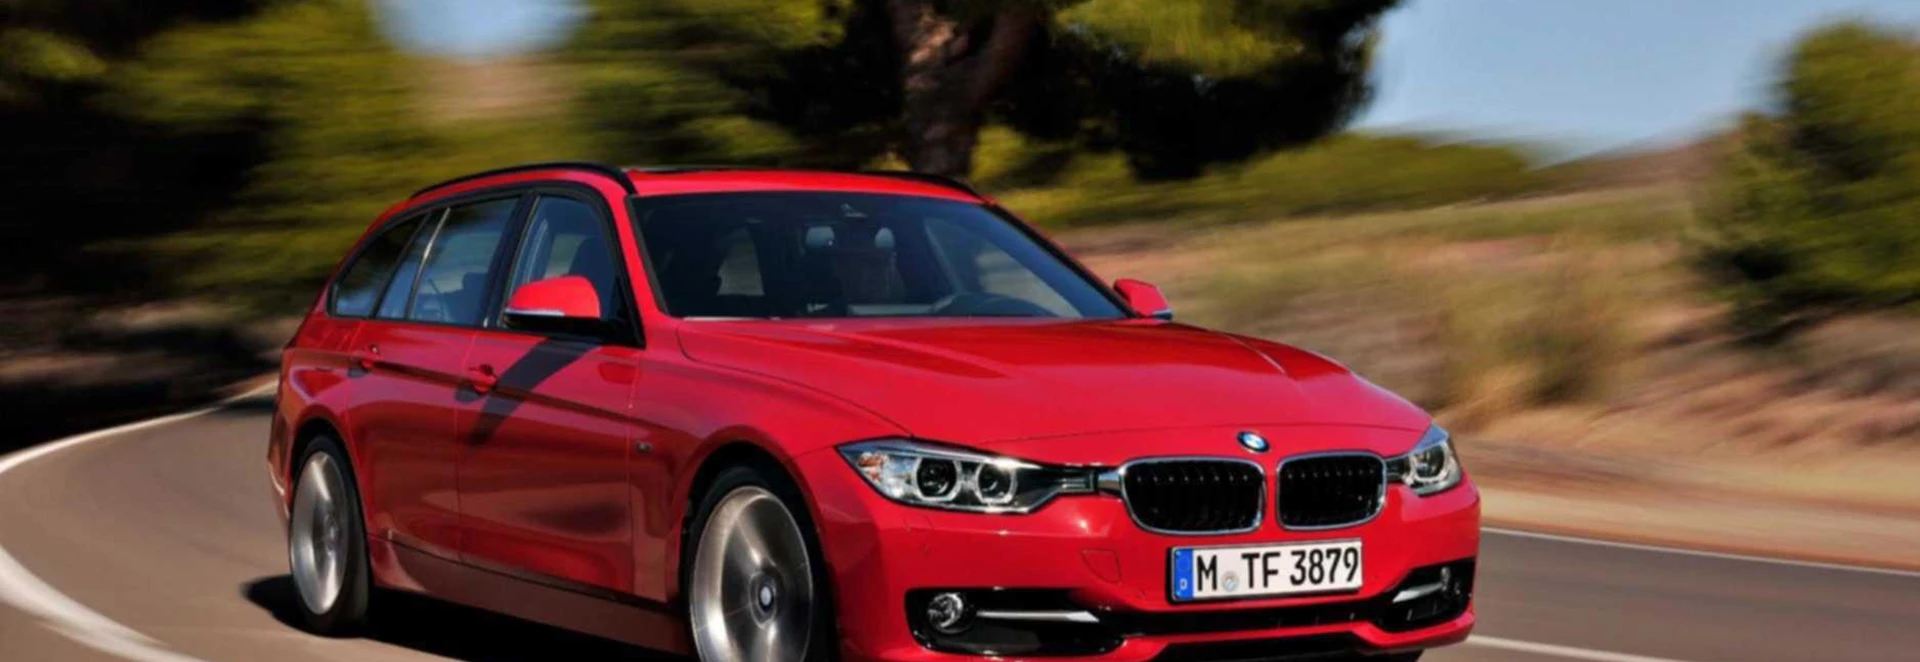 BMW 3 Series Touring estate review 